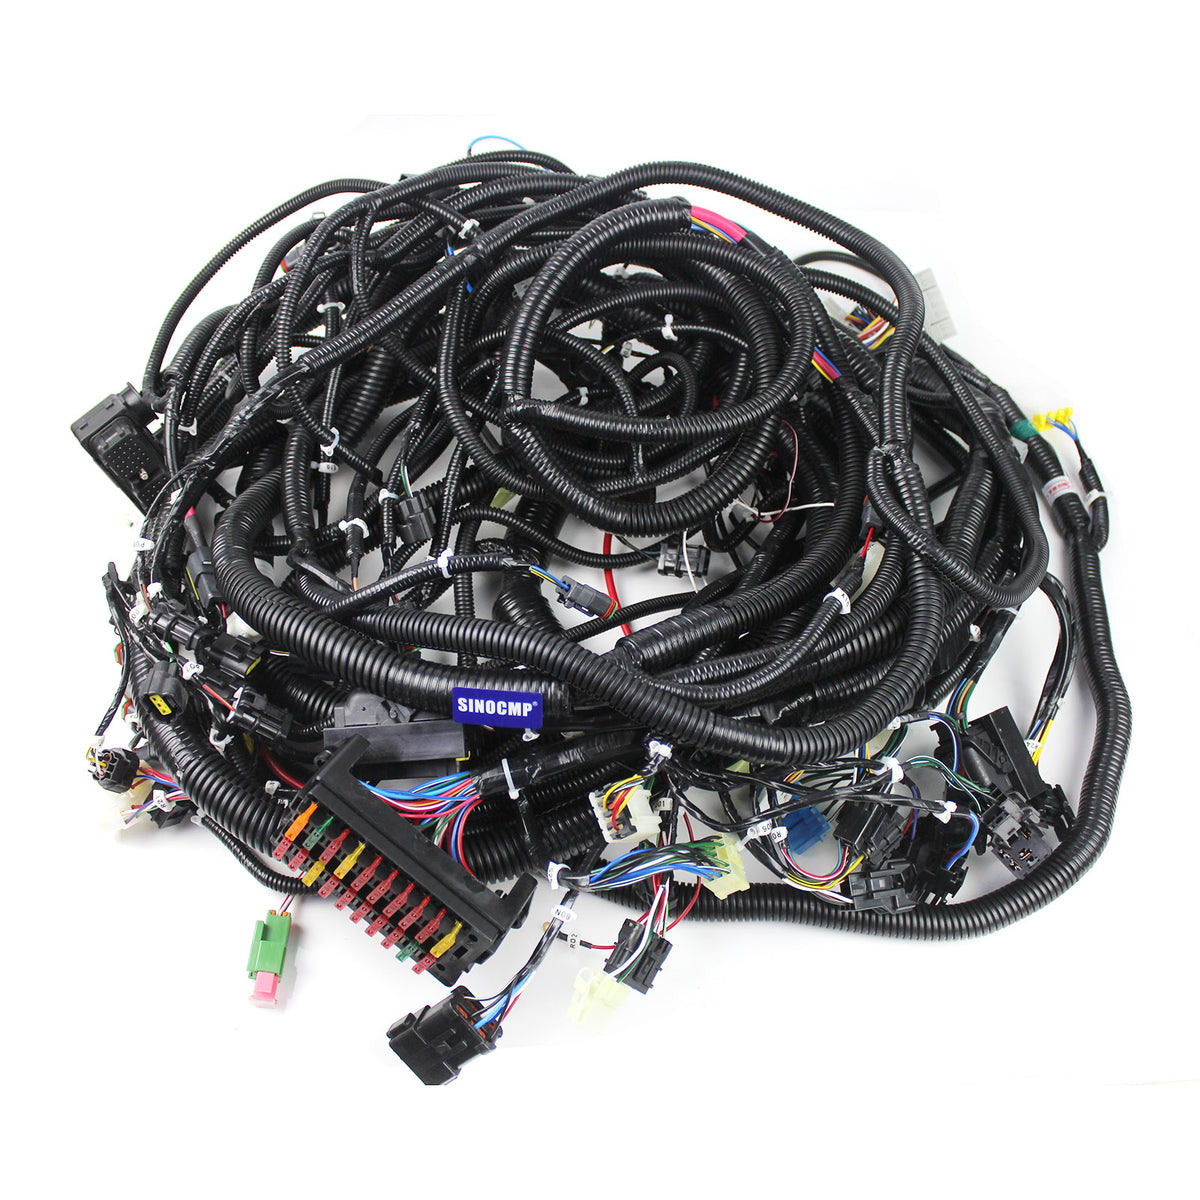 20Y-06-41112 Main Wire Harness for Komatsu PC220-8 PC200-8 